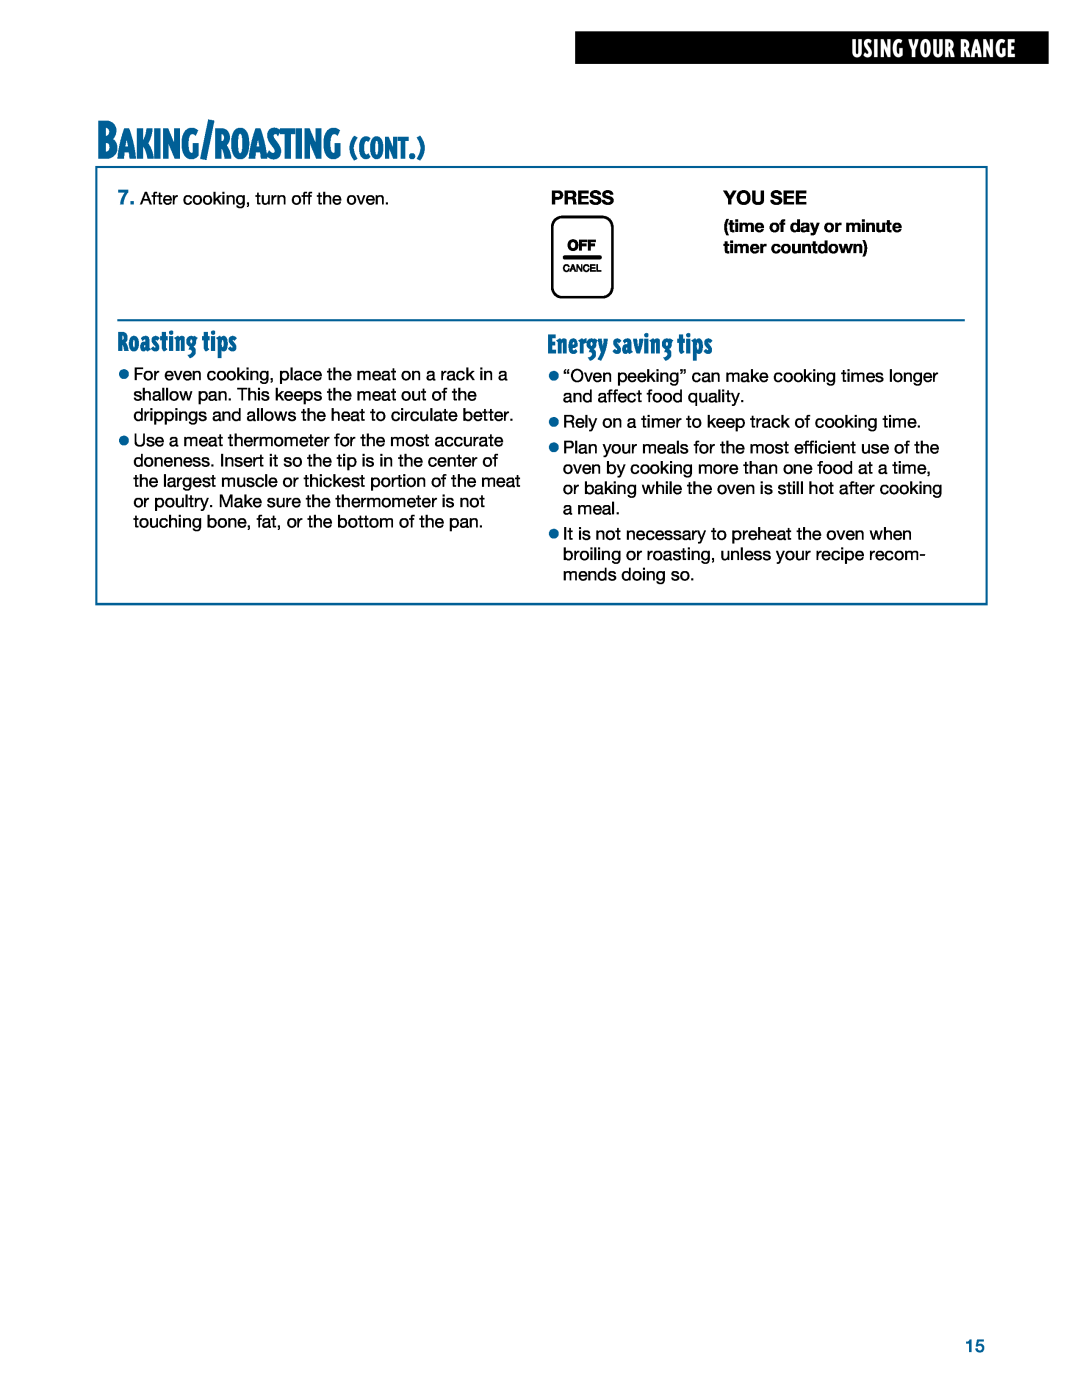 Whirlpool TGS325E manual Roasting tips, Baking/Roasting Cont, Energy saving tips, You See, Using Your Range, Press 